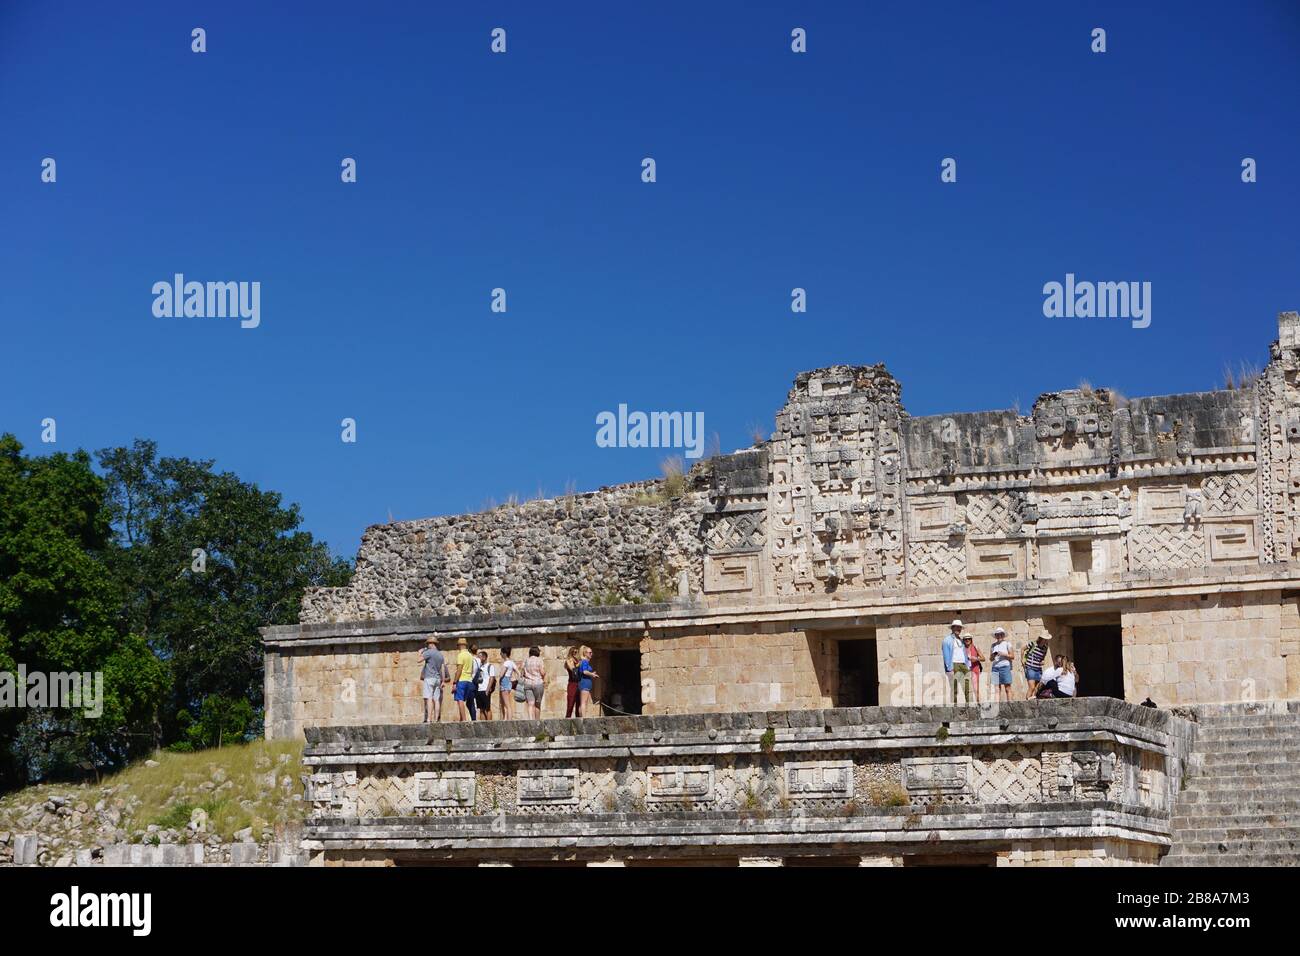 Uxmal, Mexico: Tourists visiting the Mesoamerican ball court at the ancient Mayan ruins of Uxmal. Stock Photo